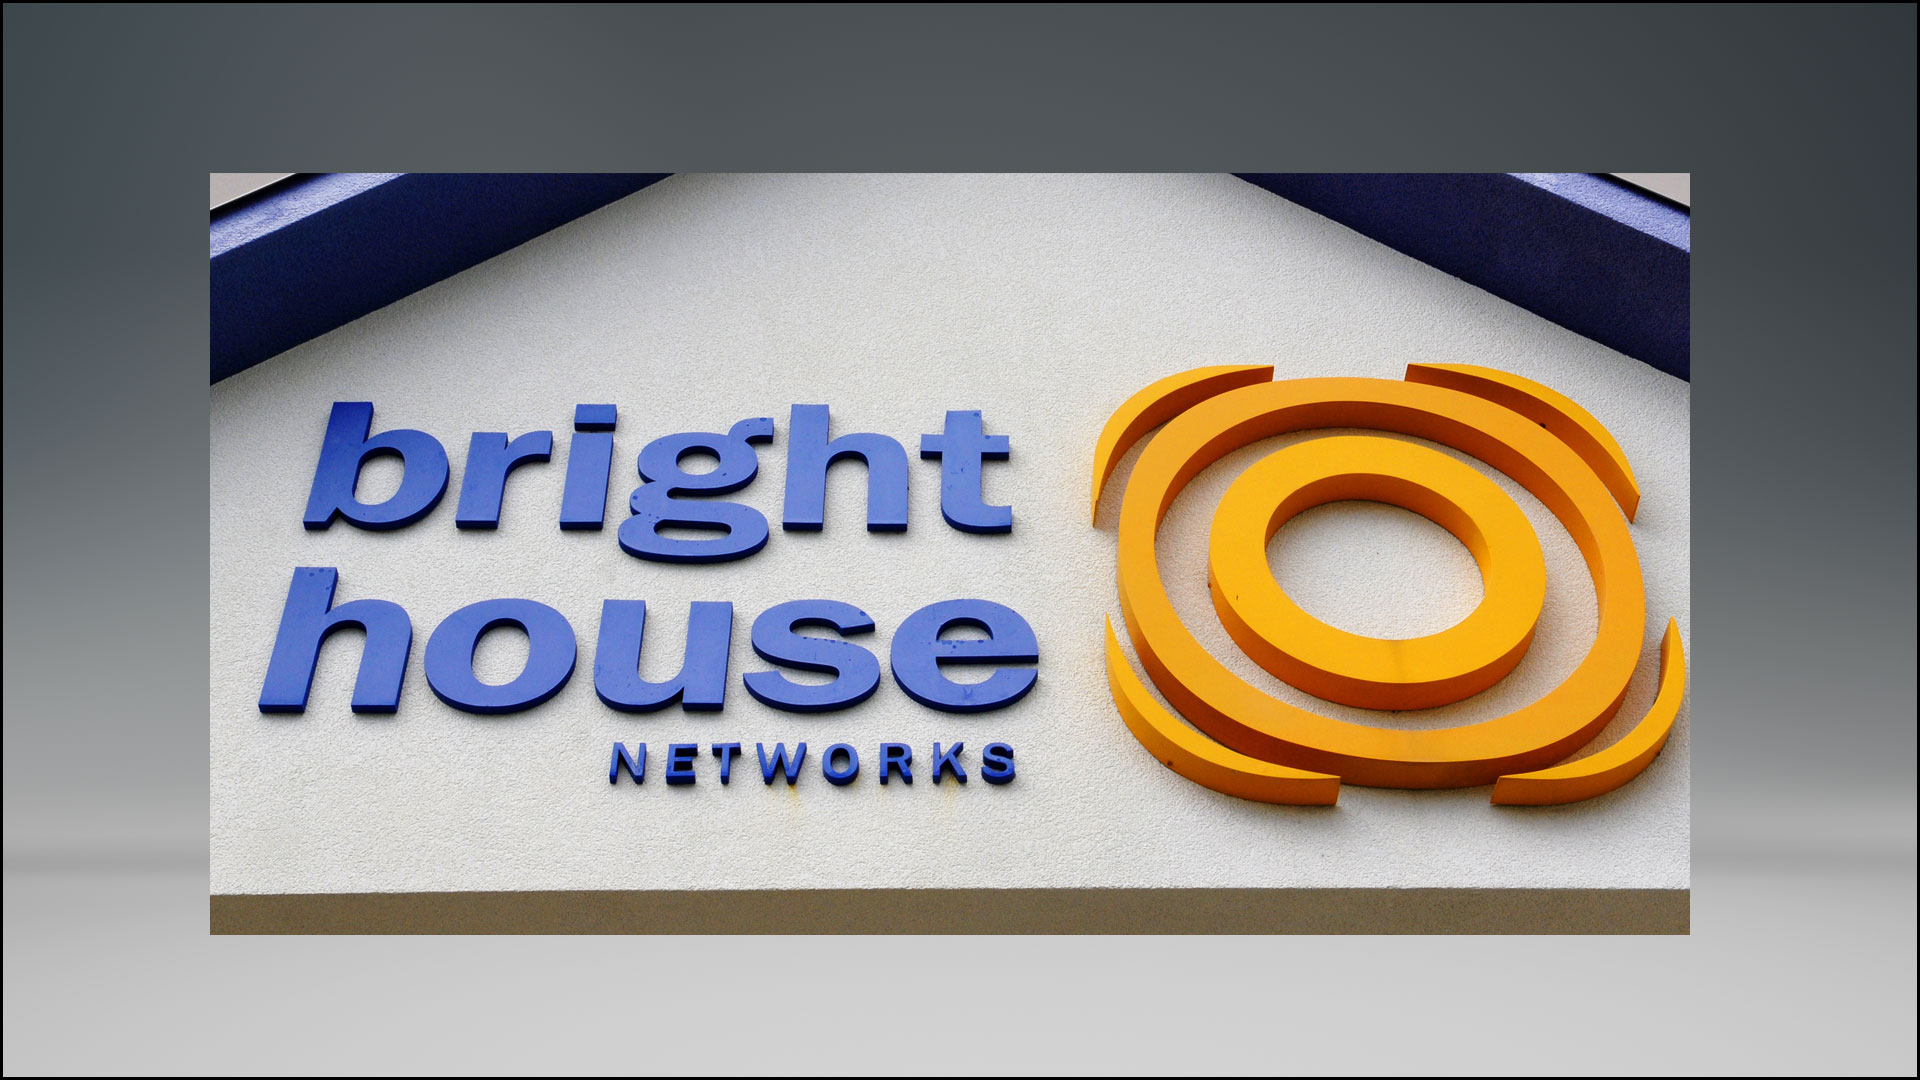 Bright house networks jobs melbourne fl